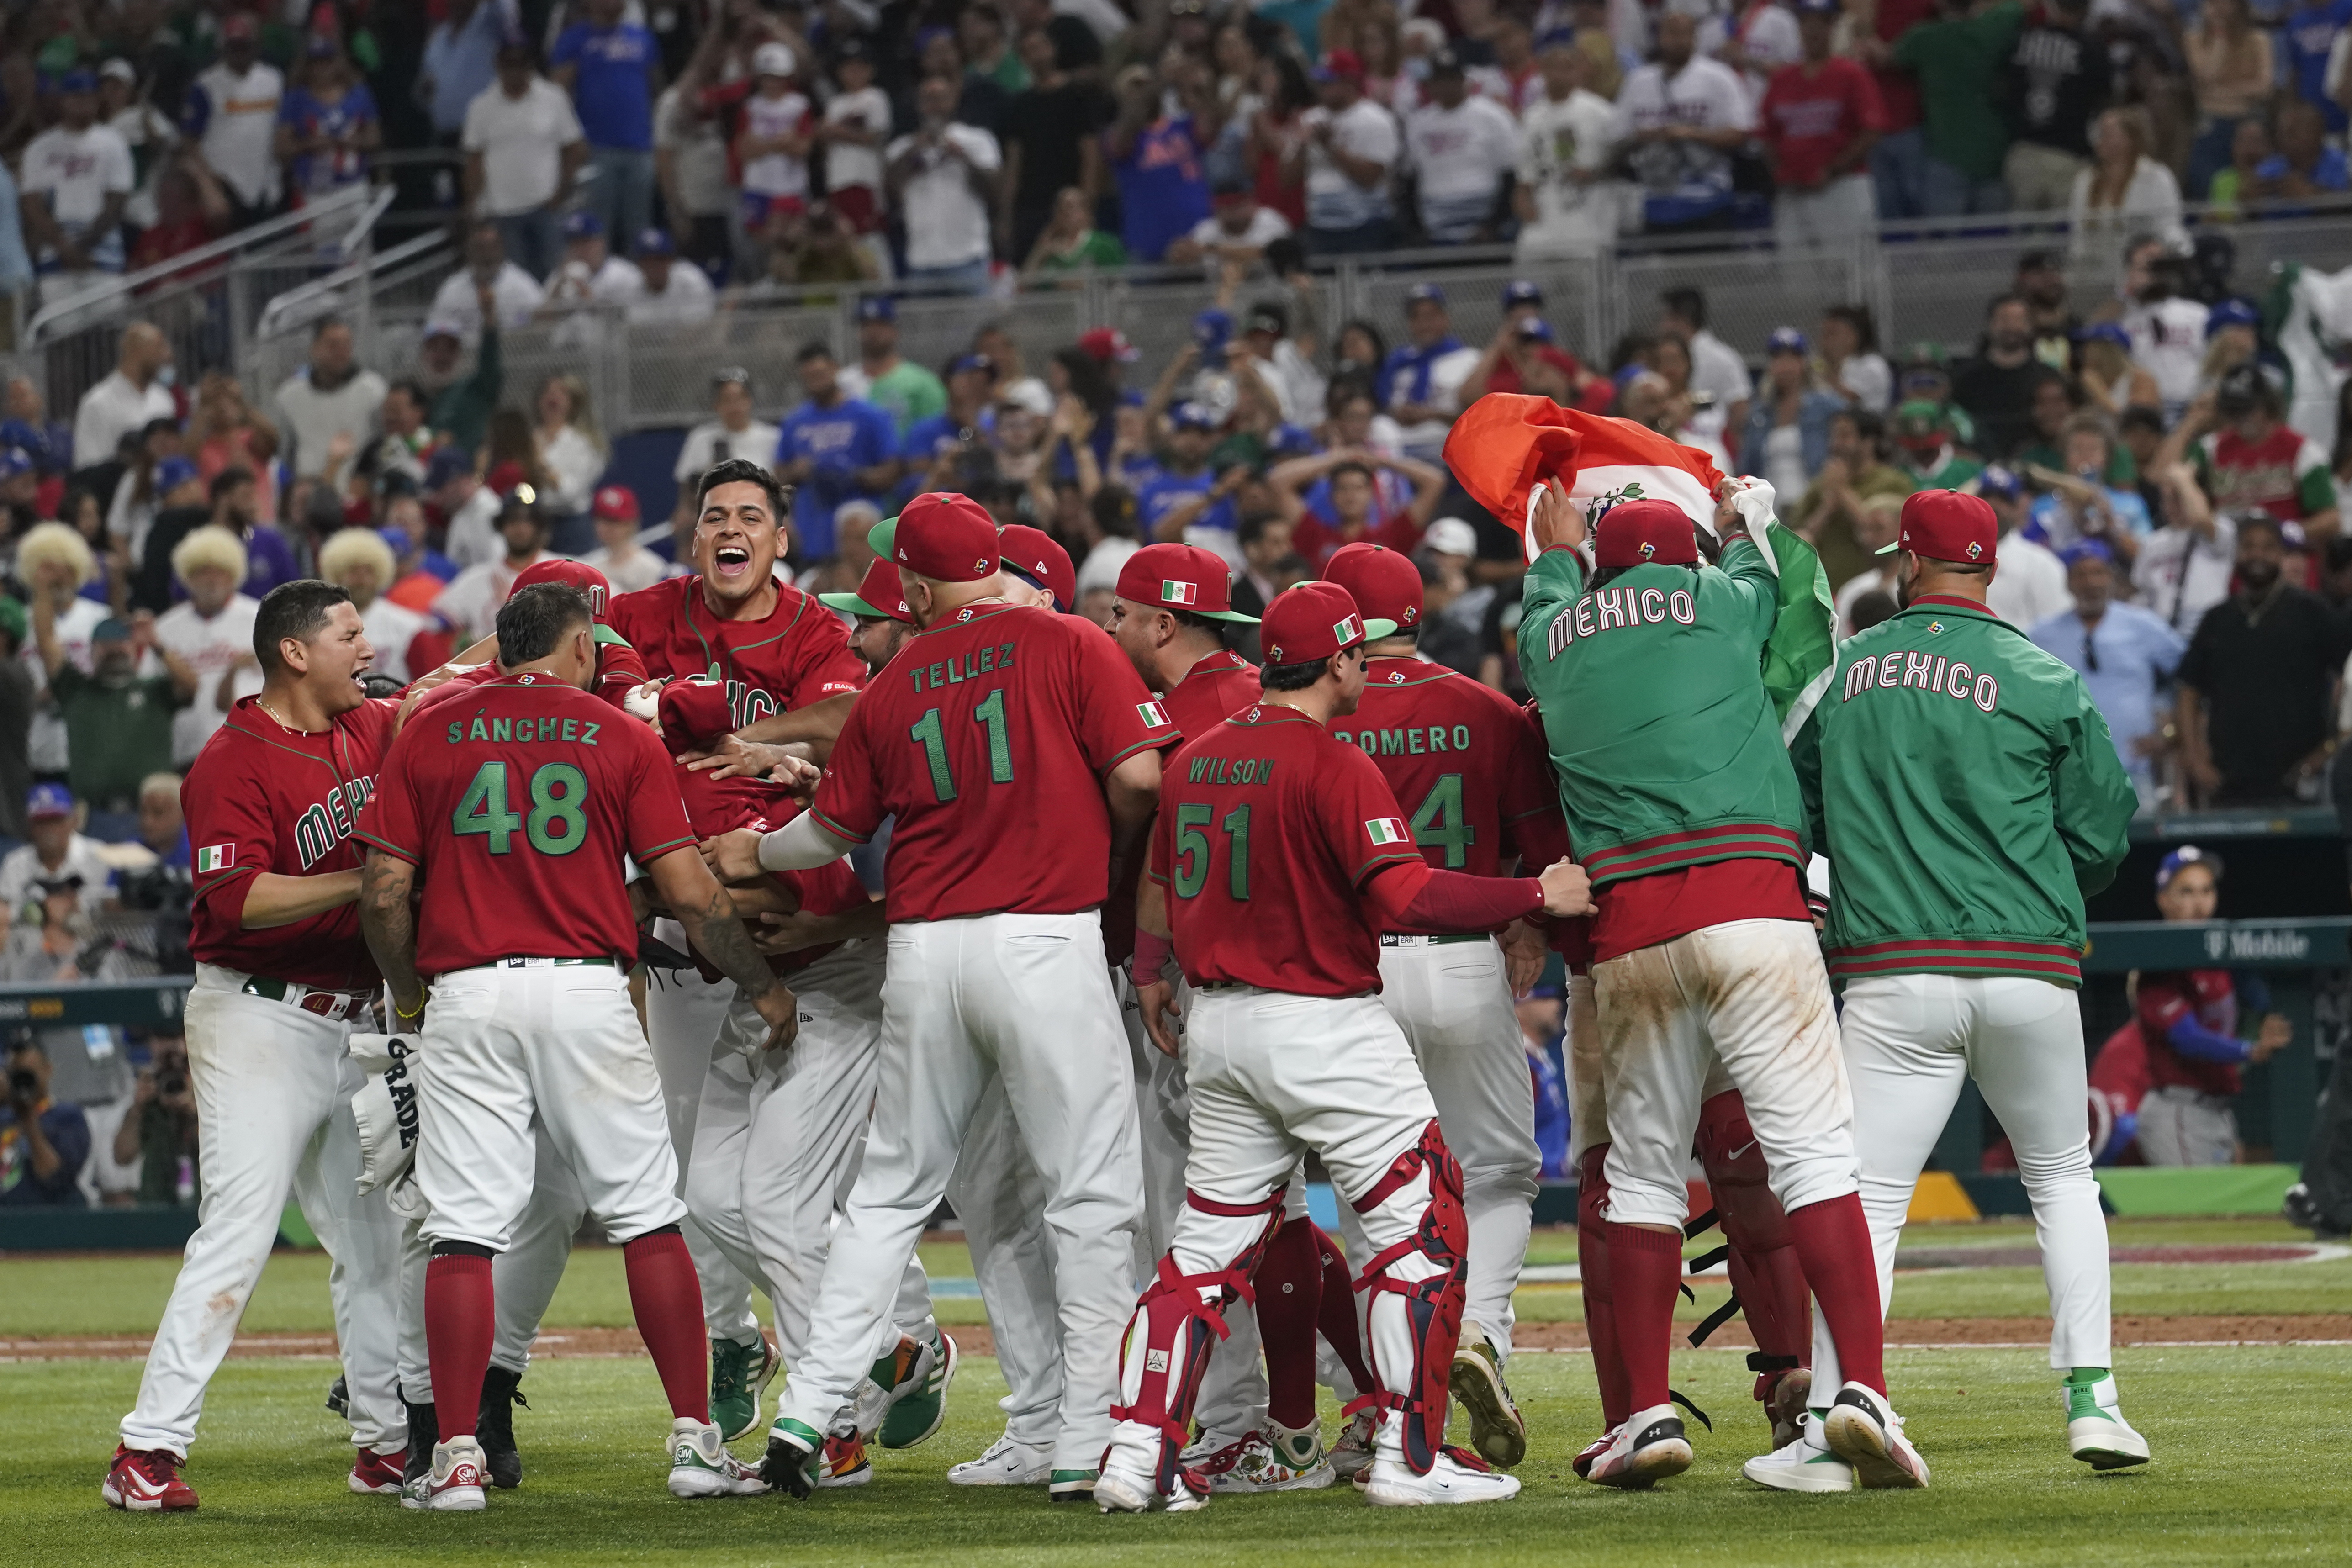 Japan gets walk-off win vs. Mexico in World Baseball Classic semifinal